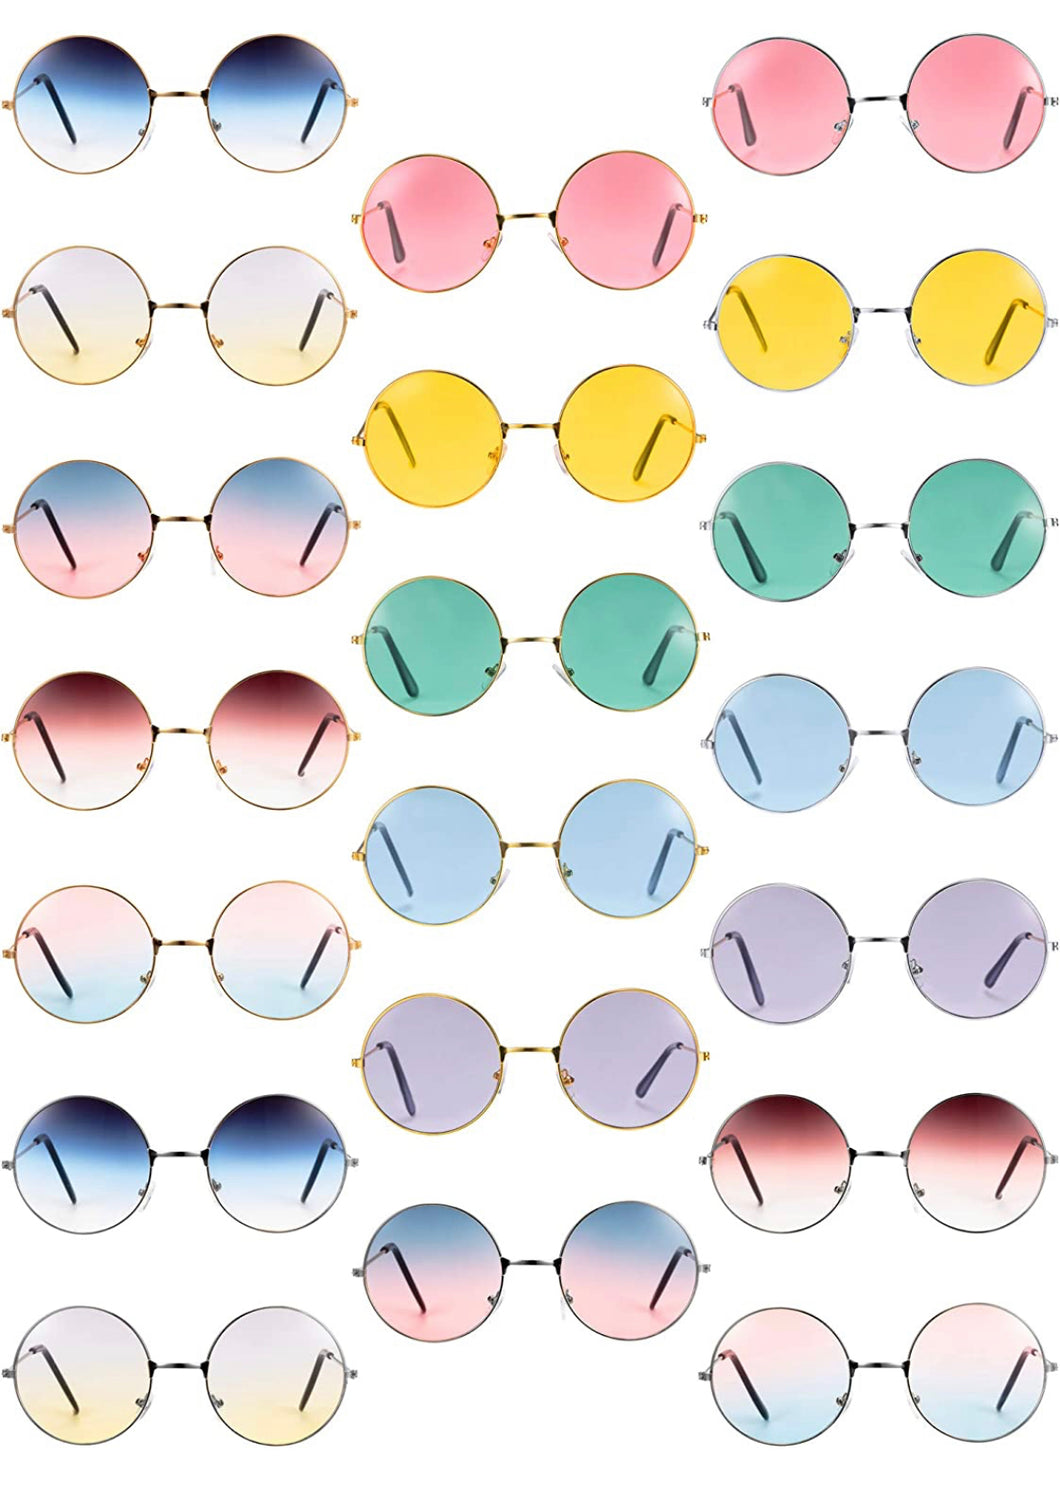 Circle sunglasses